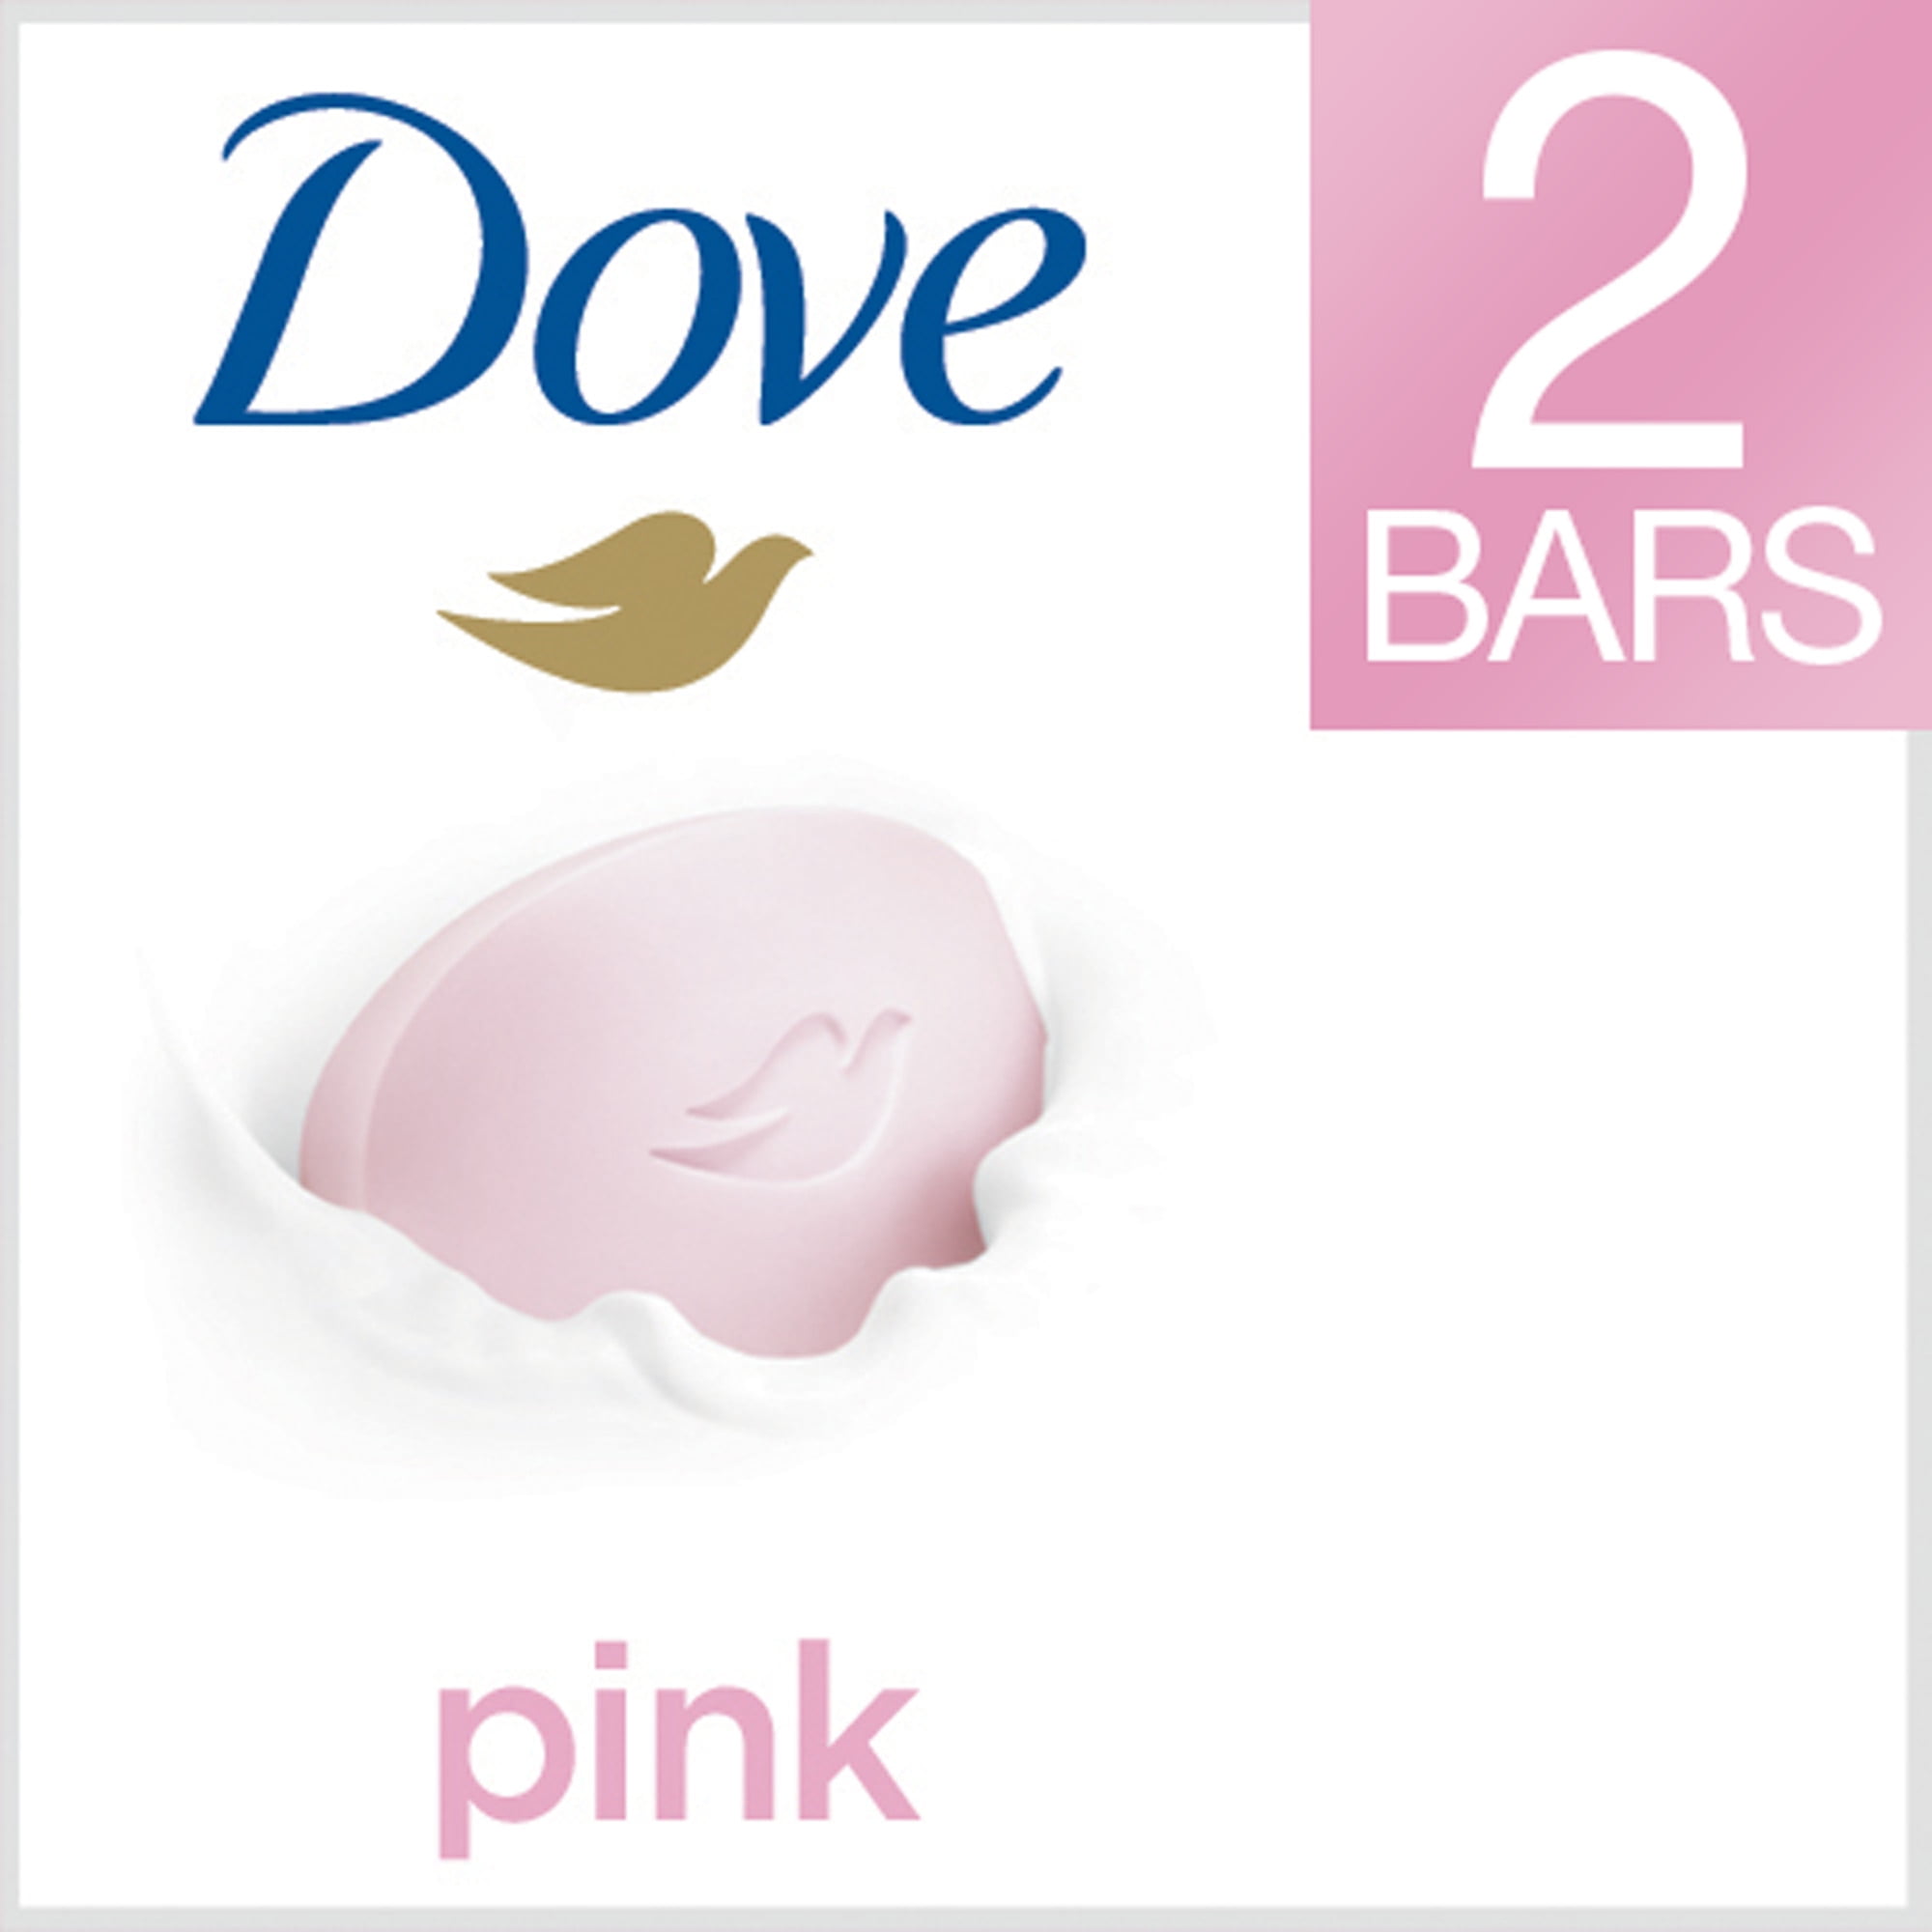 Dove Beauty Bar Gentle Skin Cleanser Pink More Moisturizing than Bar Soap Moisturizing for Gentle Soft Skin Care 3.75 oz, 2 Bars